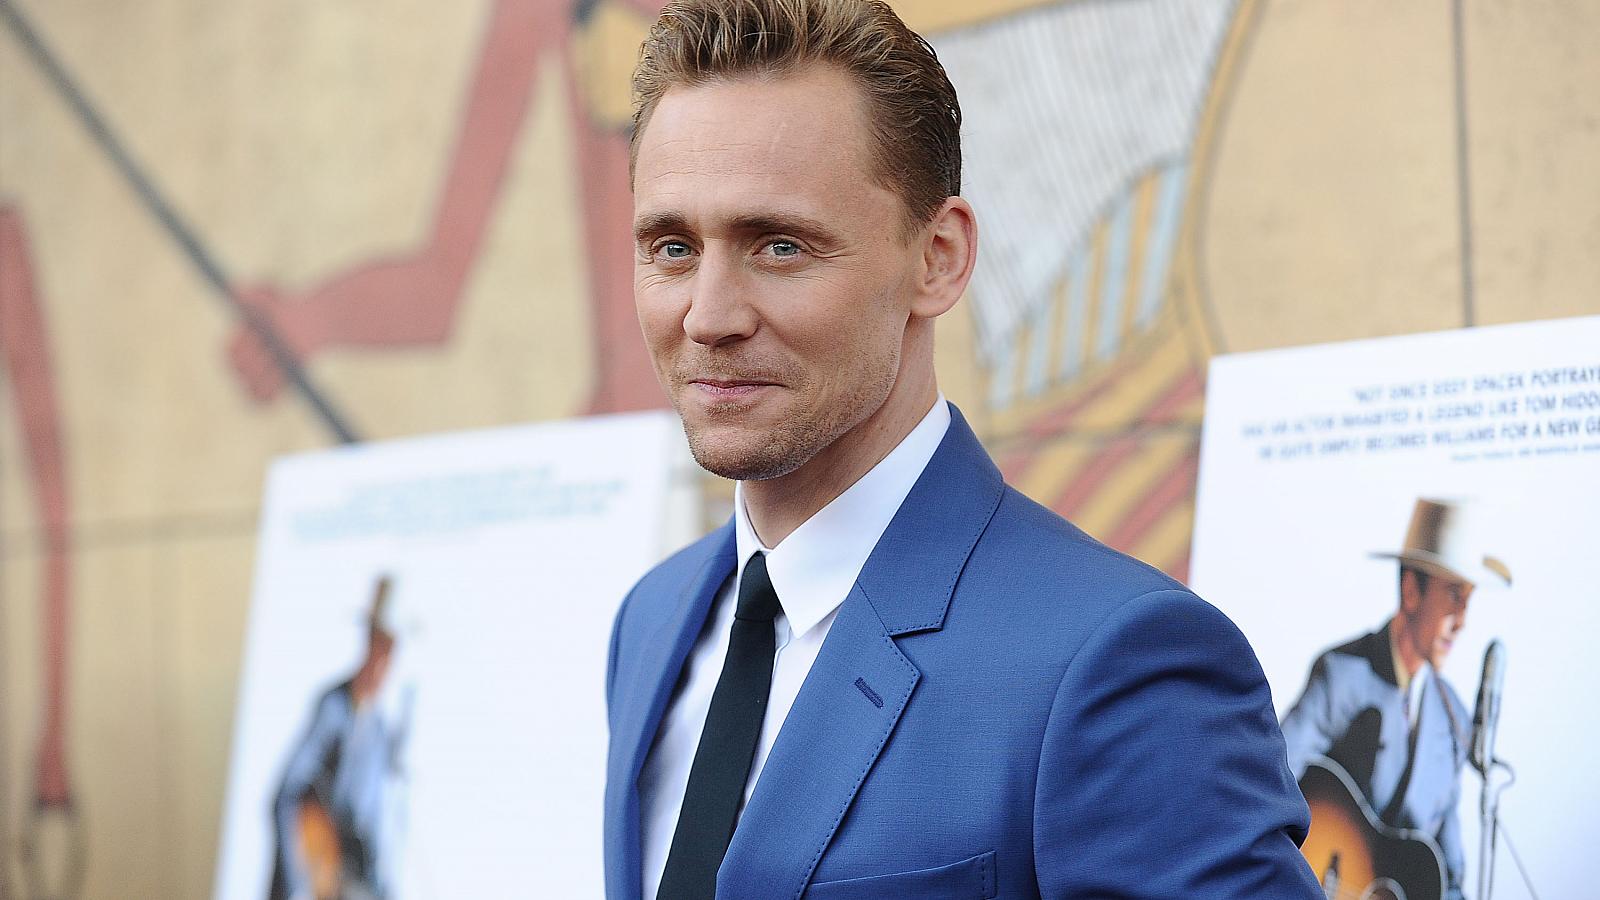 Tom Hiddleston’s Centrum ad raises eyebrows and sparks parodies